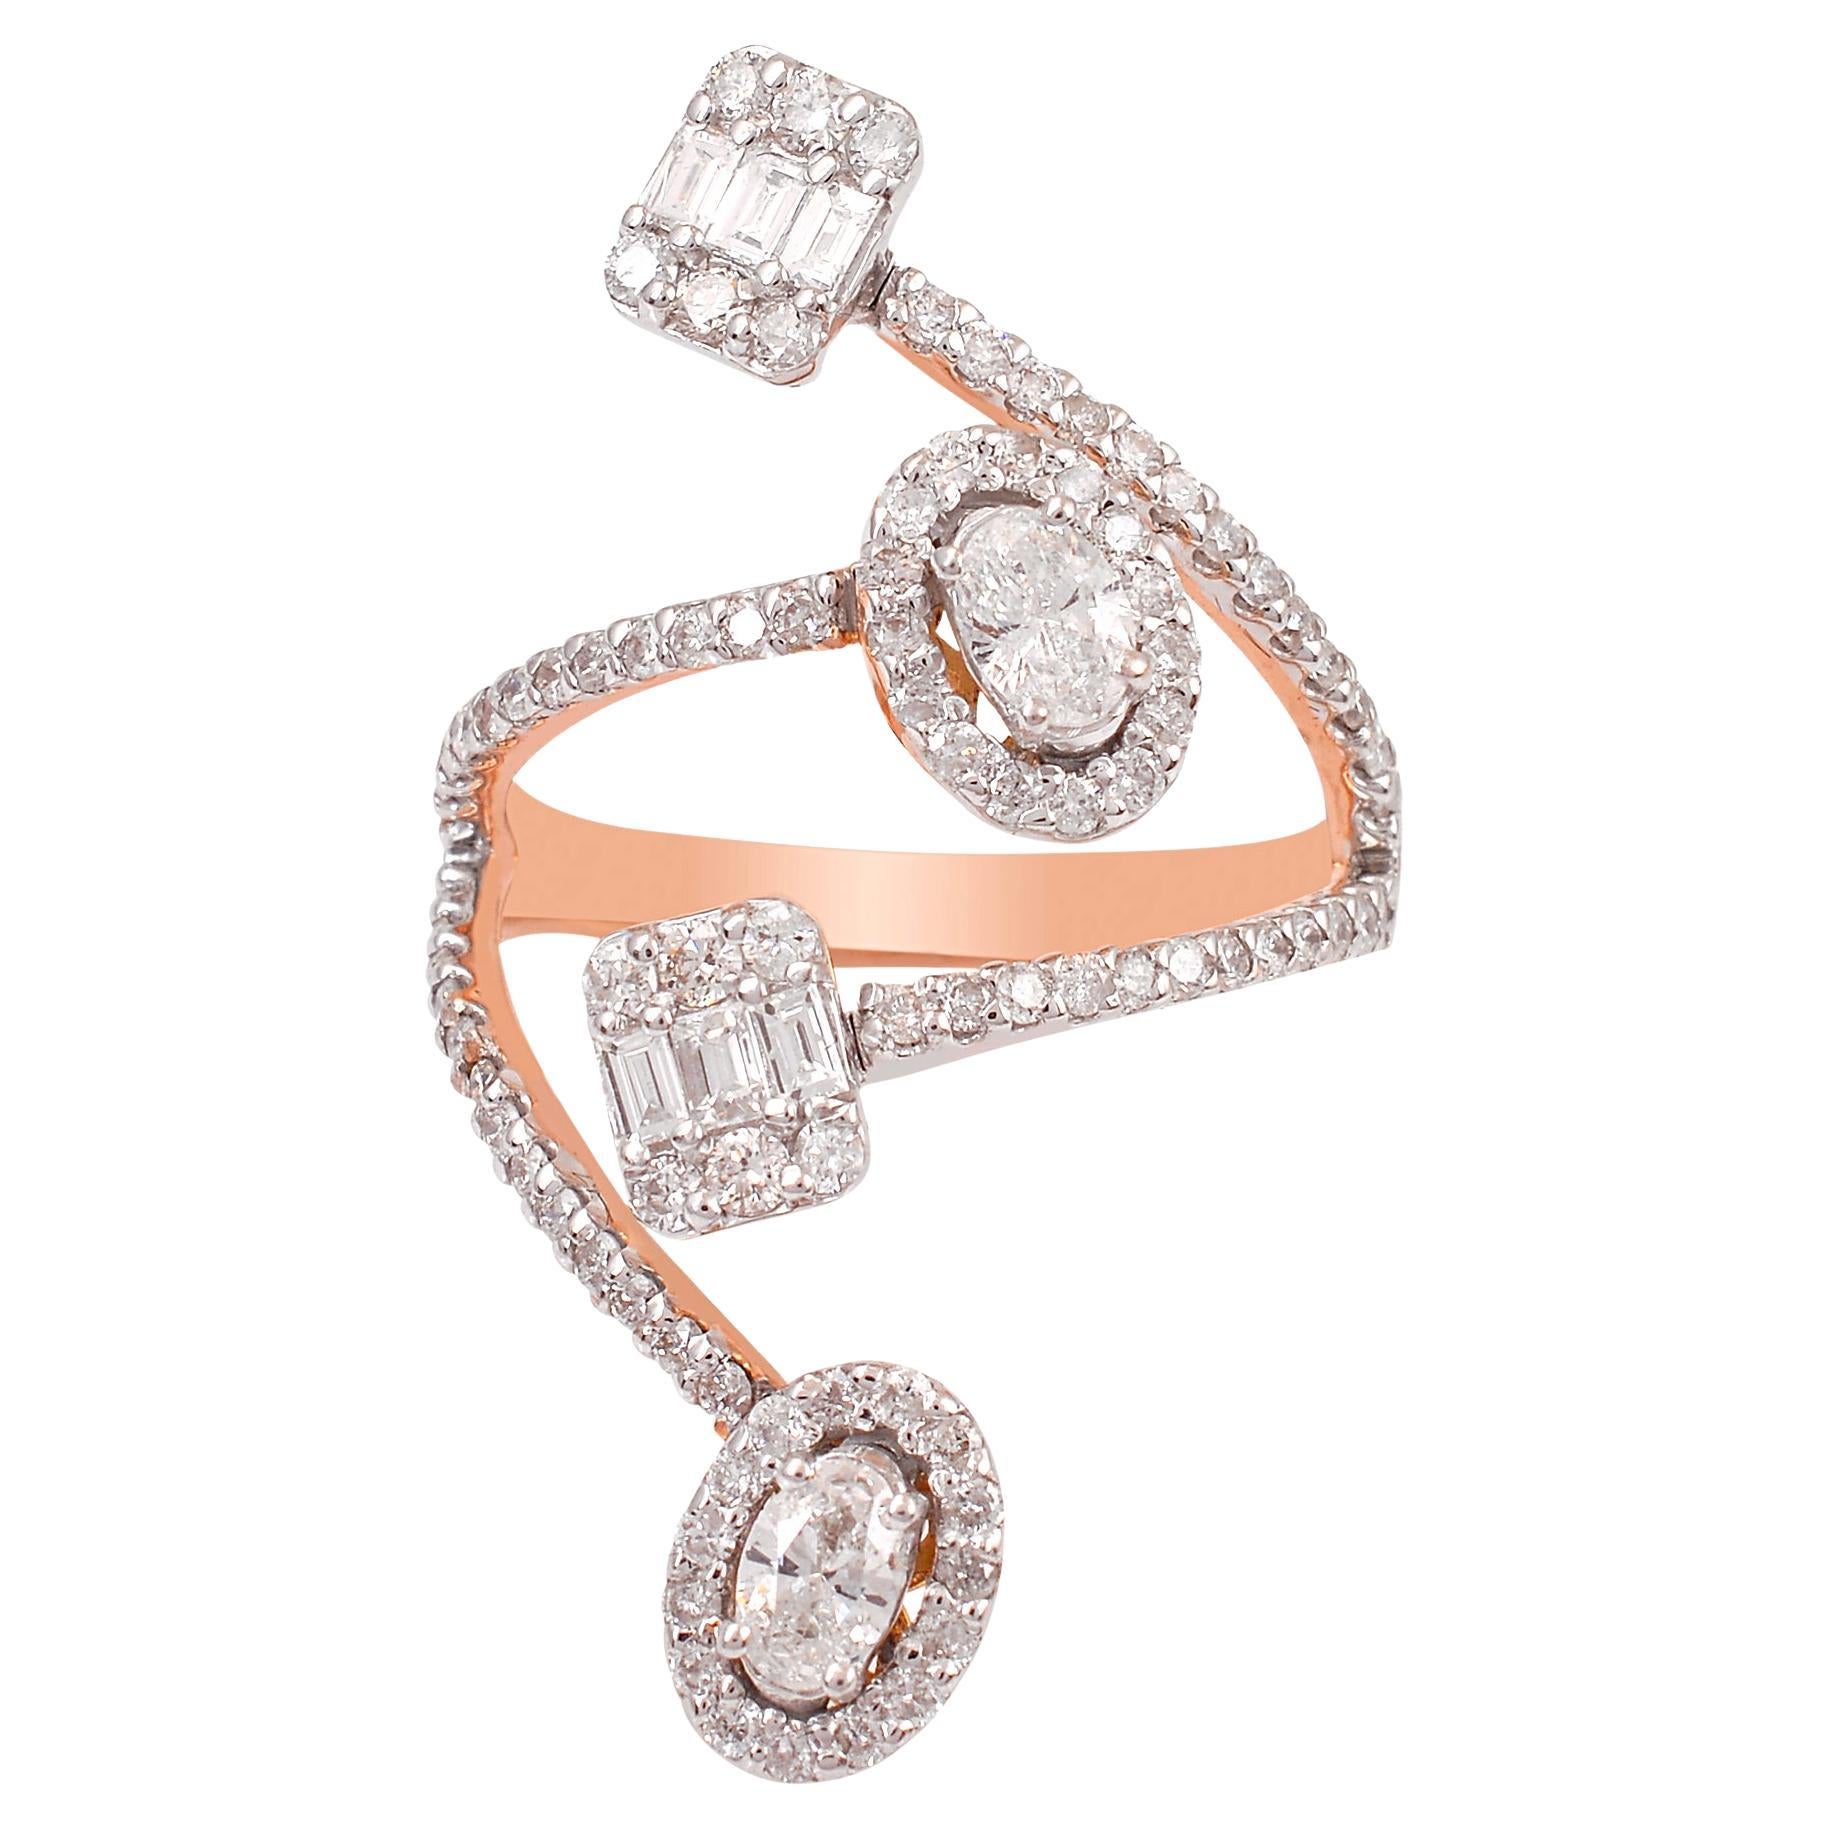 For Sale:  1.40 Carat SI Clarity HI Color Diamond Designer Ring 18 Karat Rose Gold Jewelry